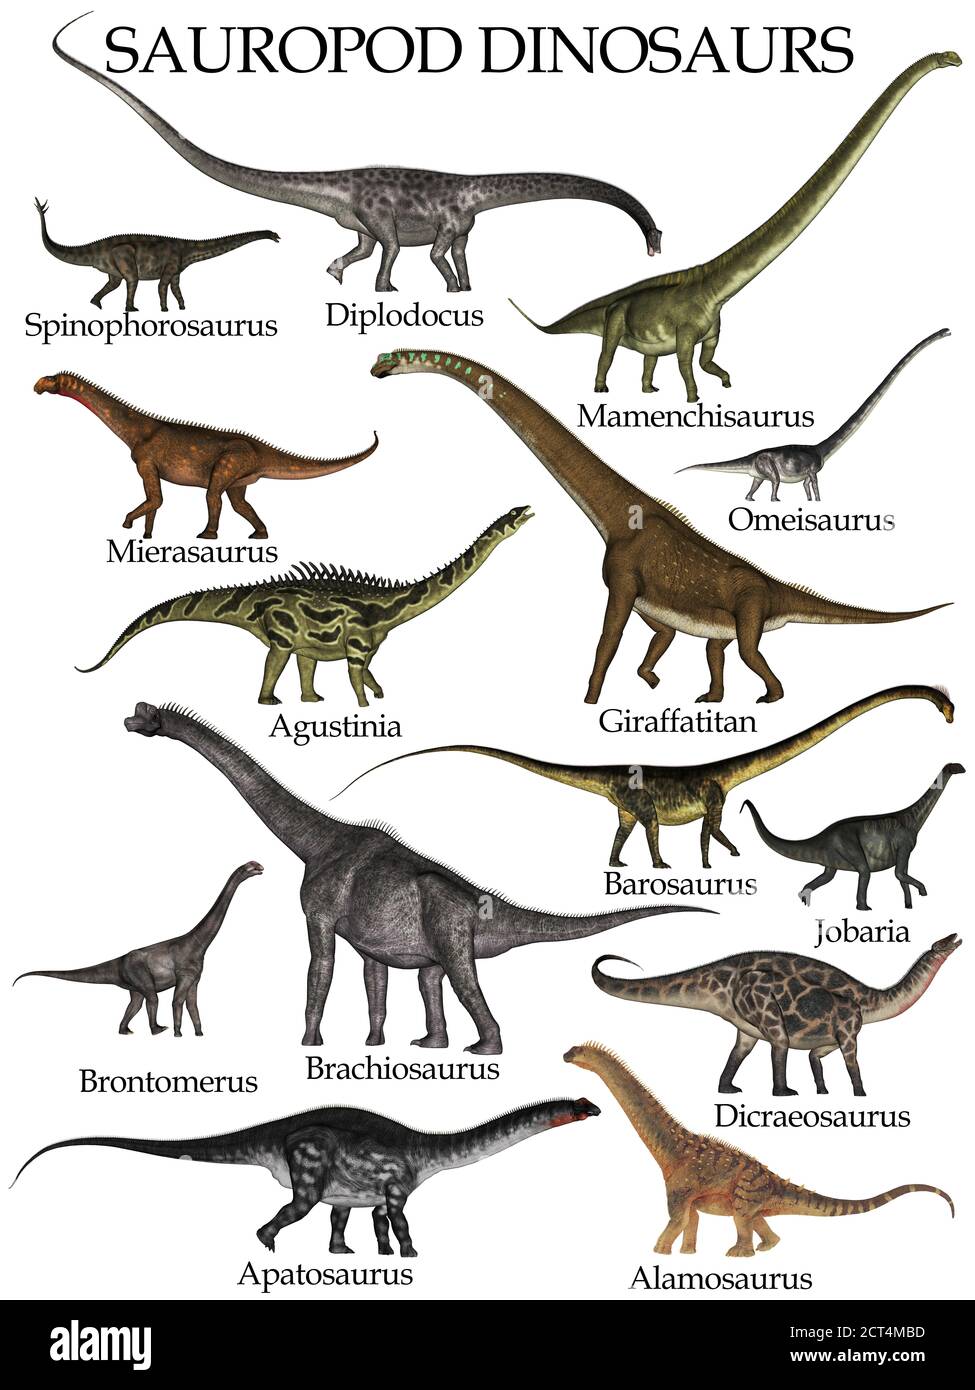 sauropod-dinosaurs-set-3d-render-2CT4MBD.jpg